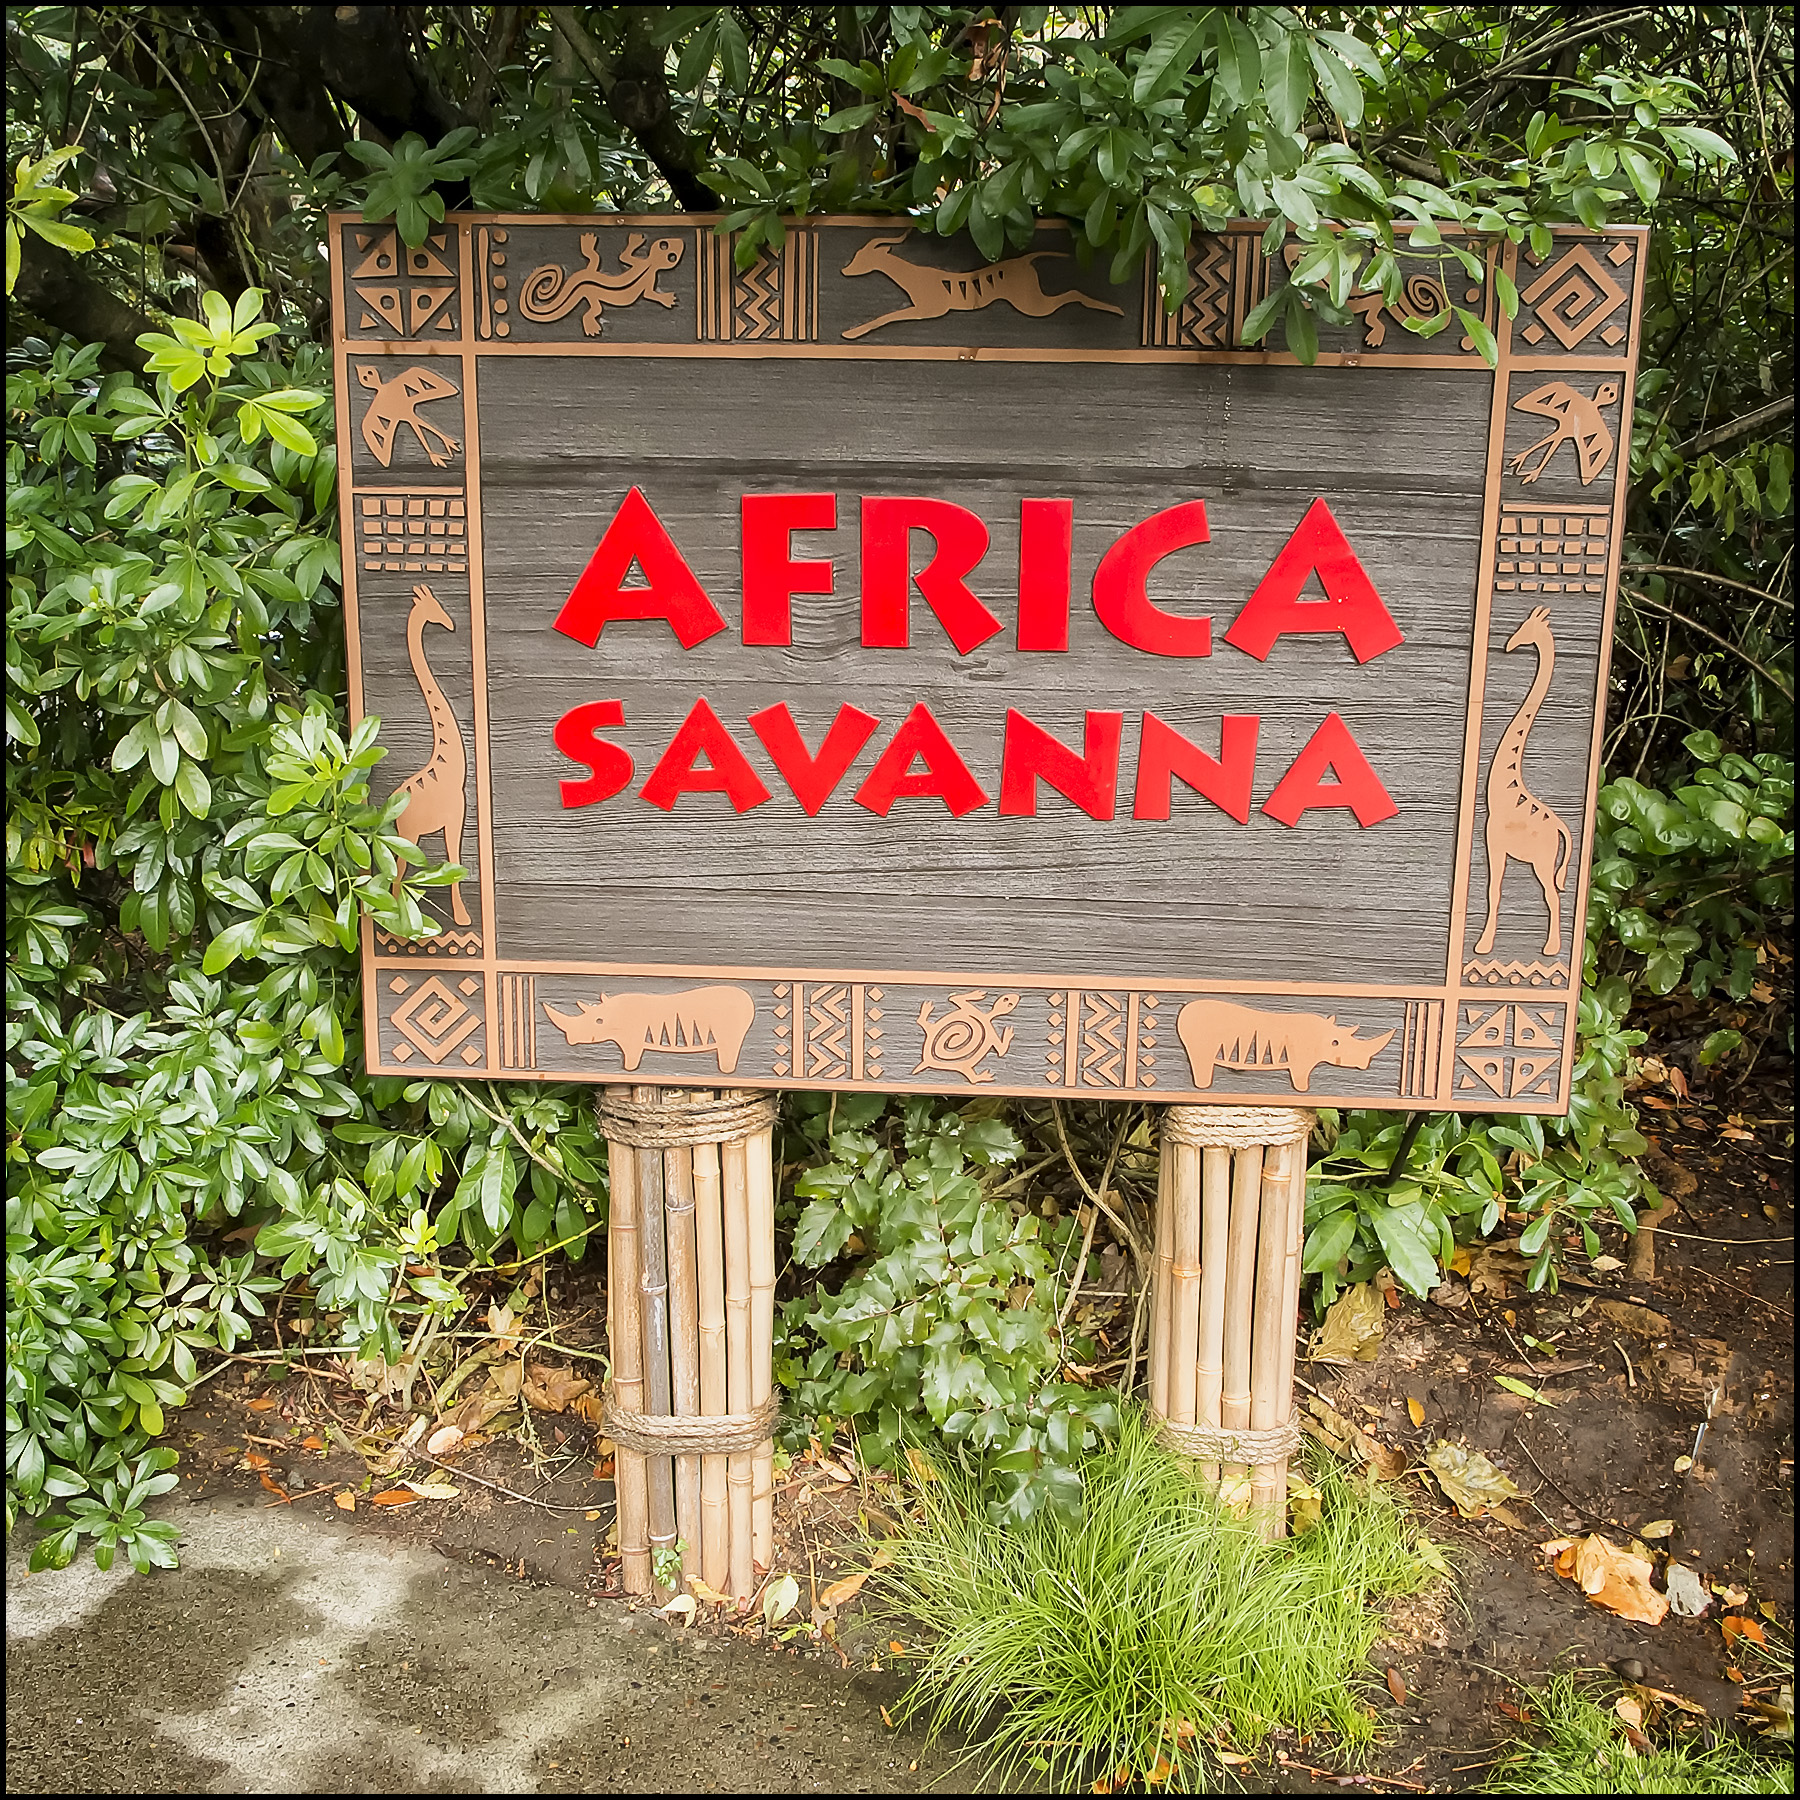 Africa savanna sign photo